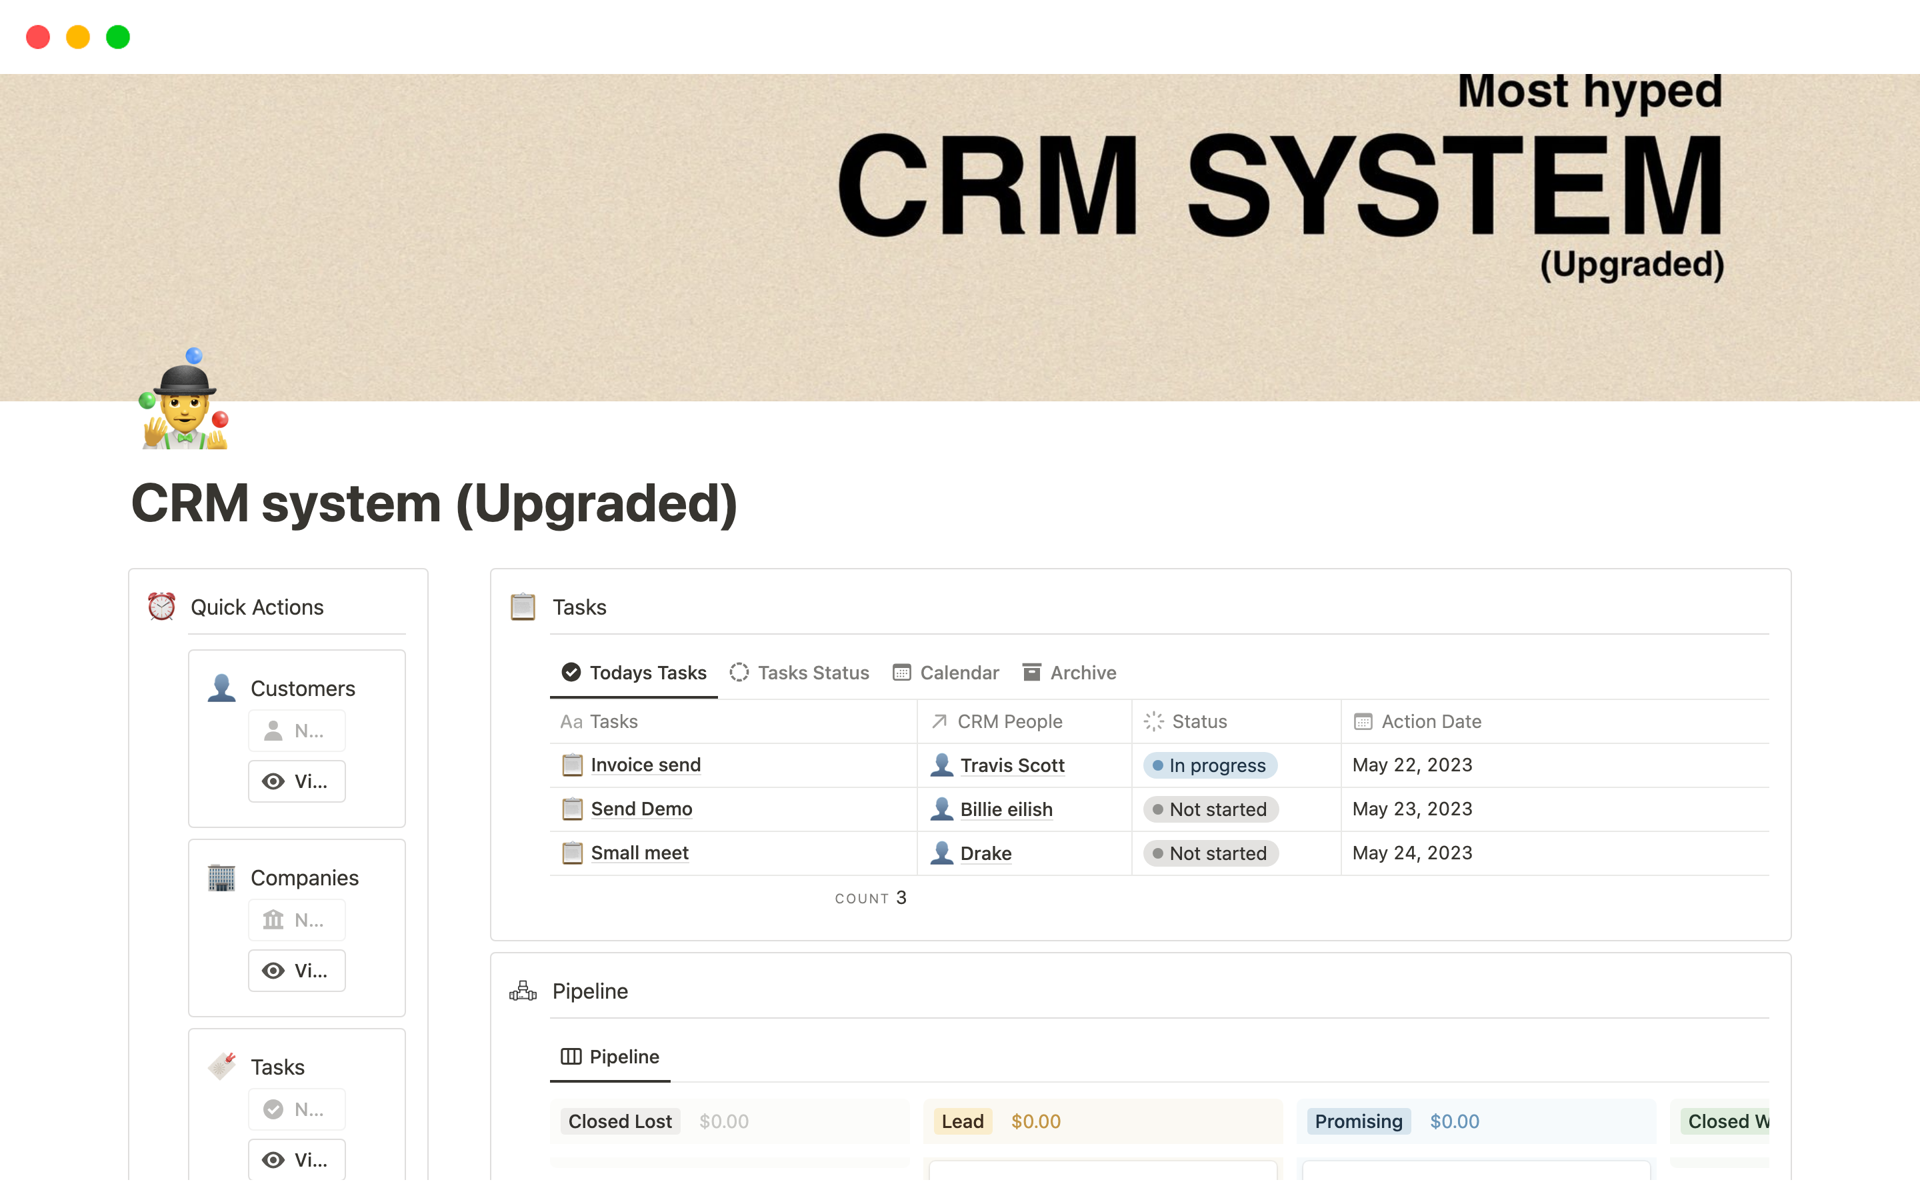 Aperçu du modèle de CRM system (Upgraded)